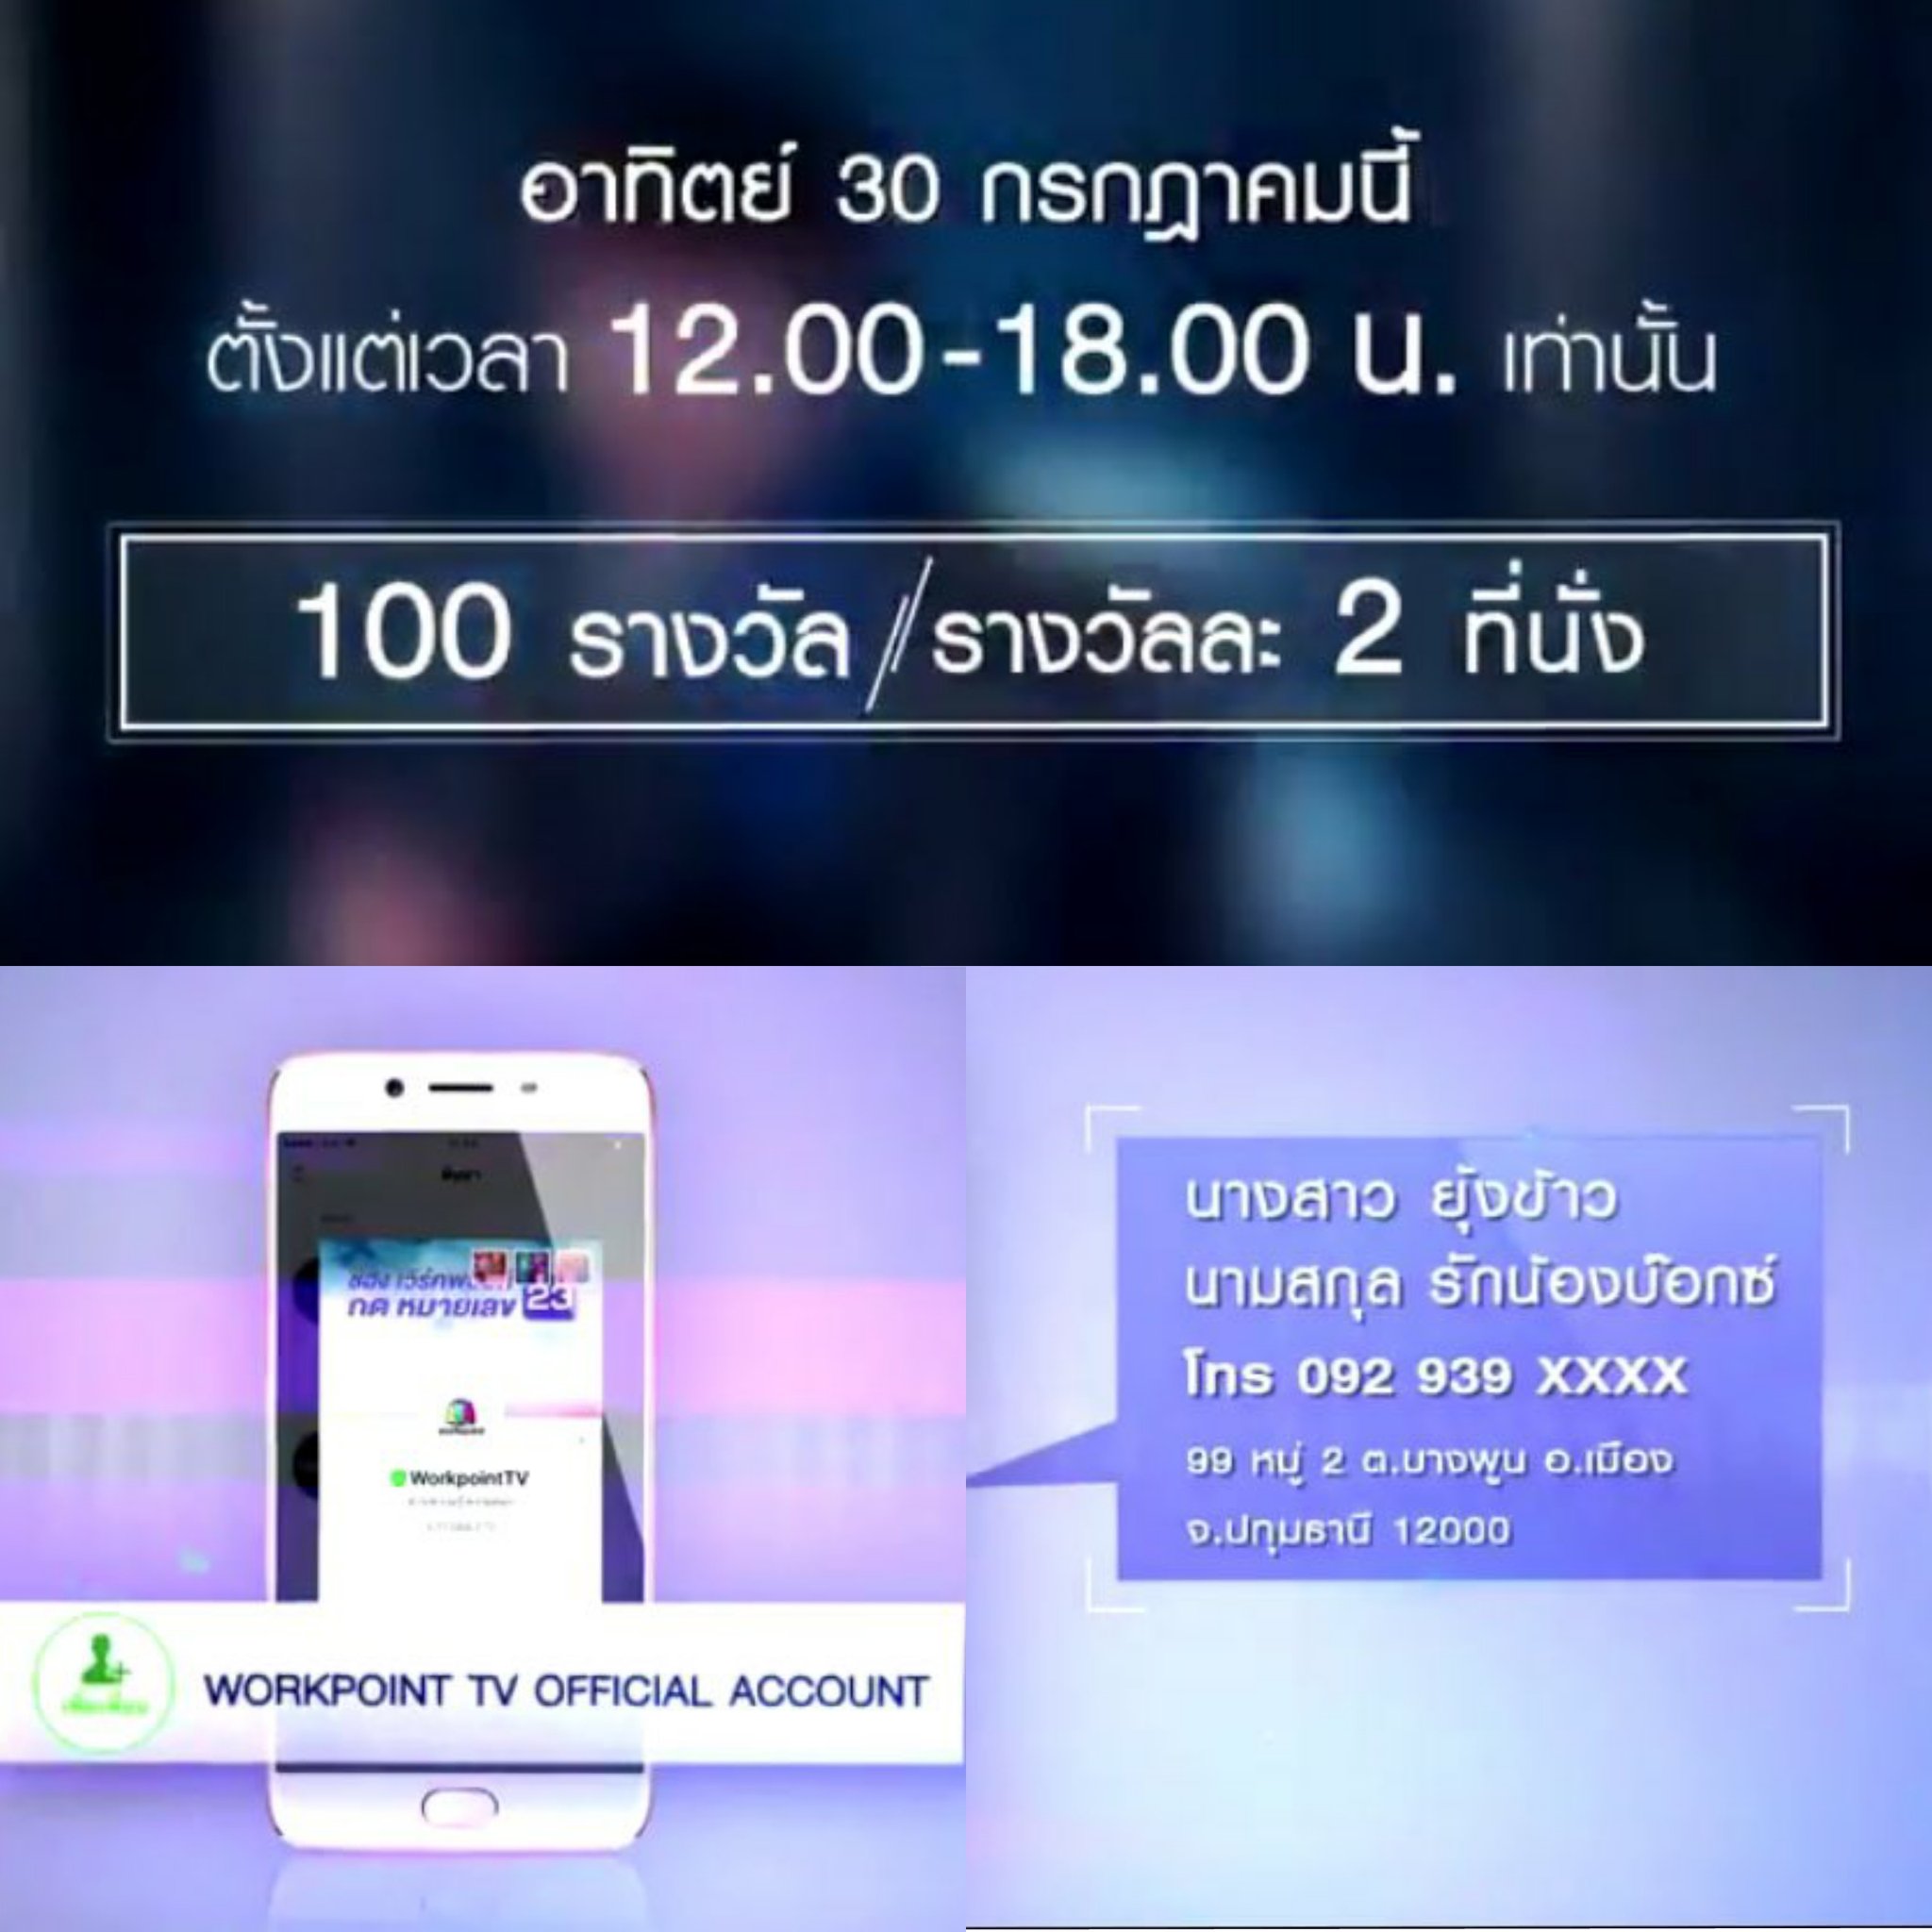 line ประเทศไทย official account address